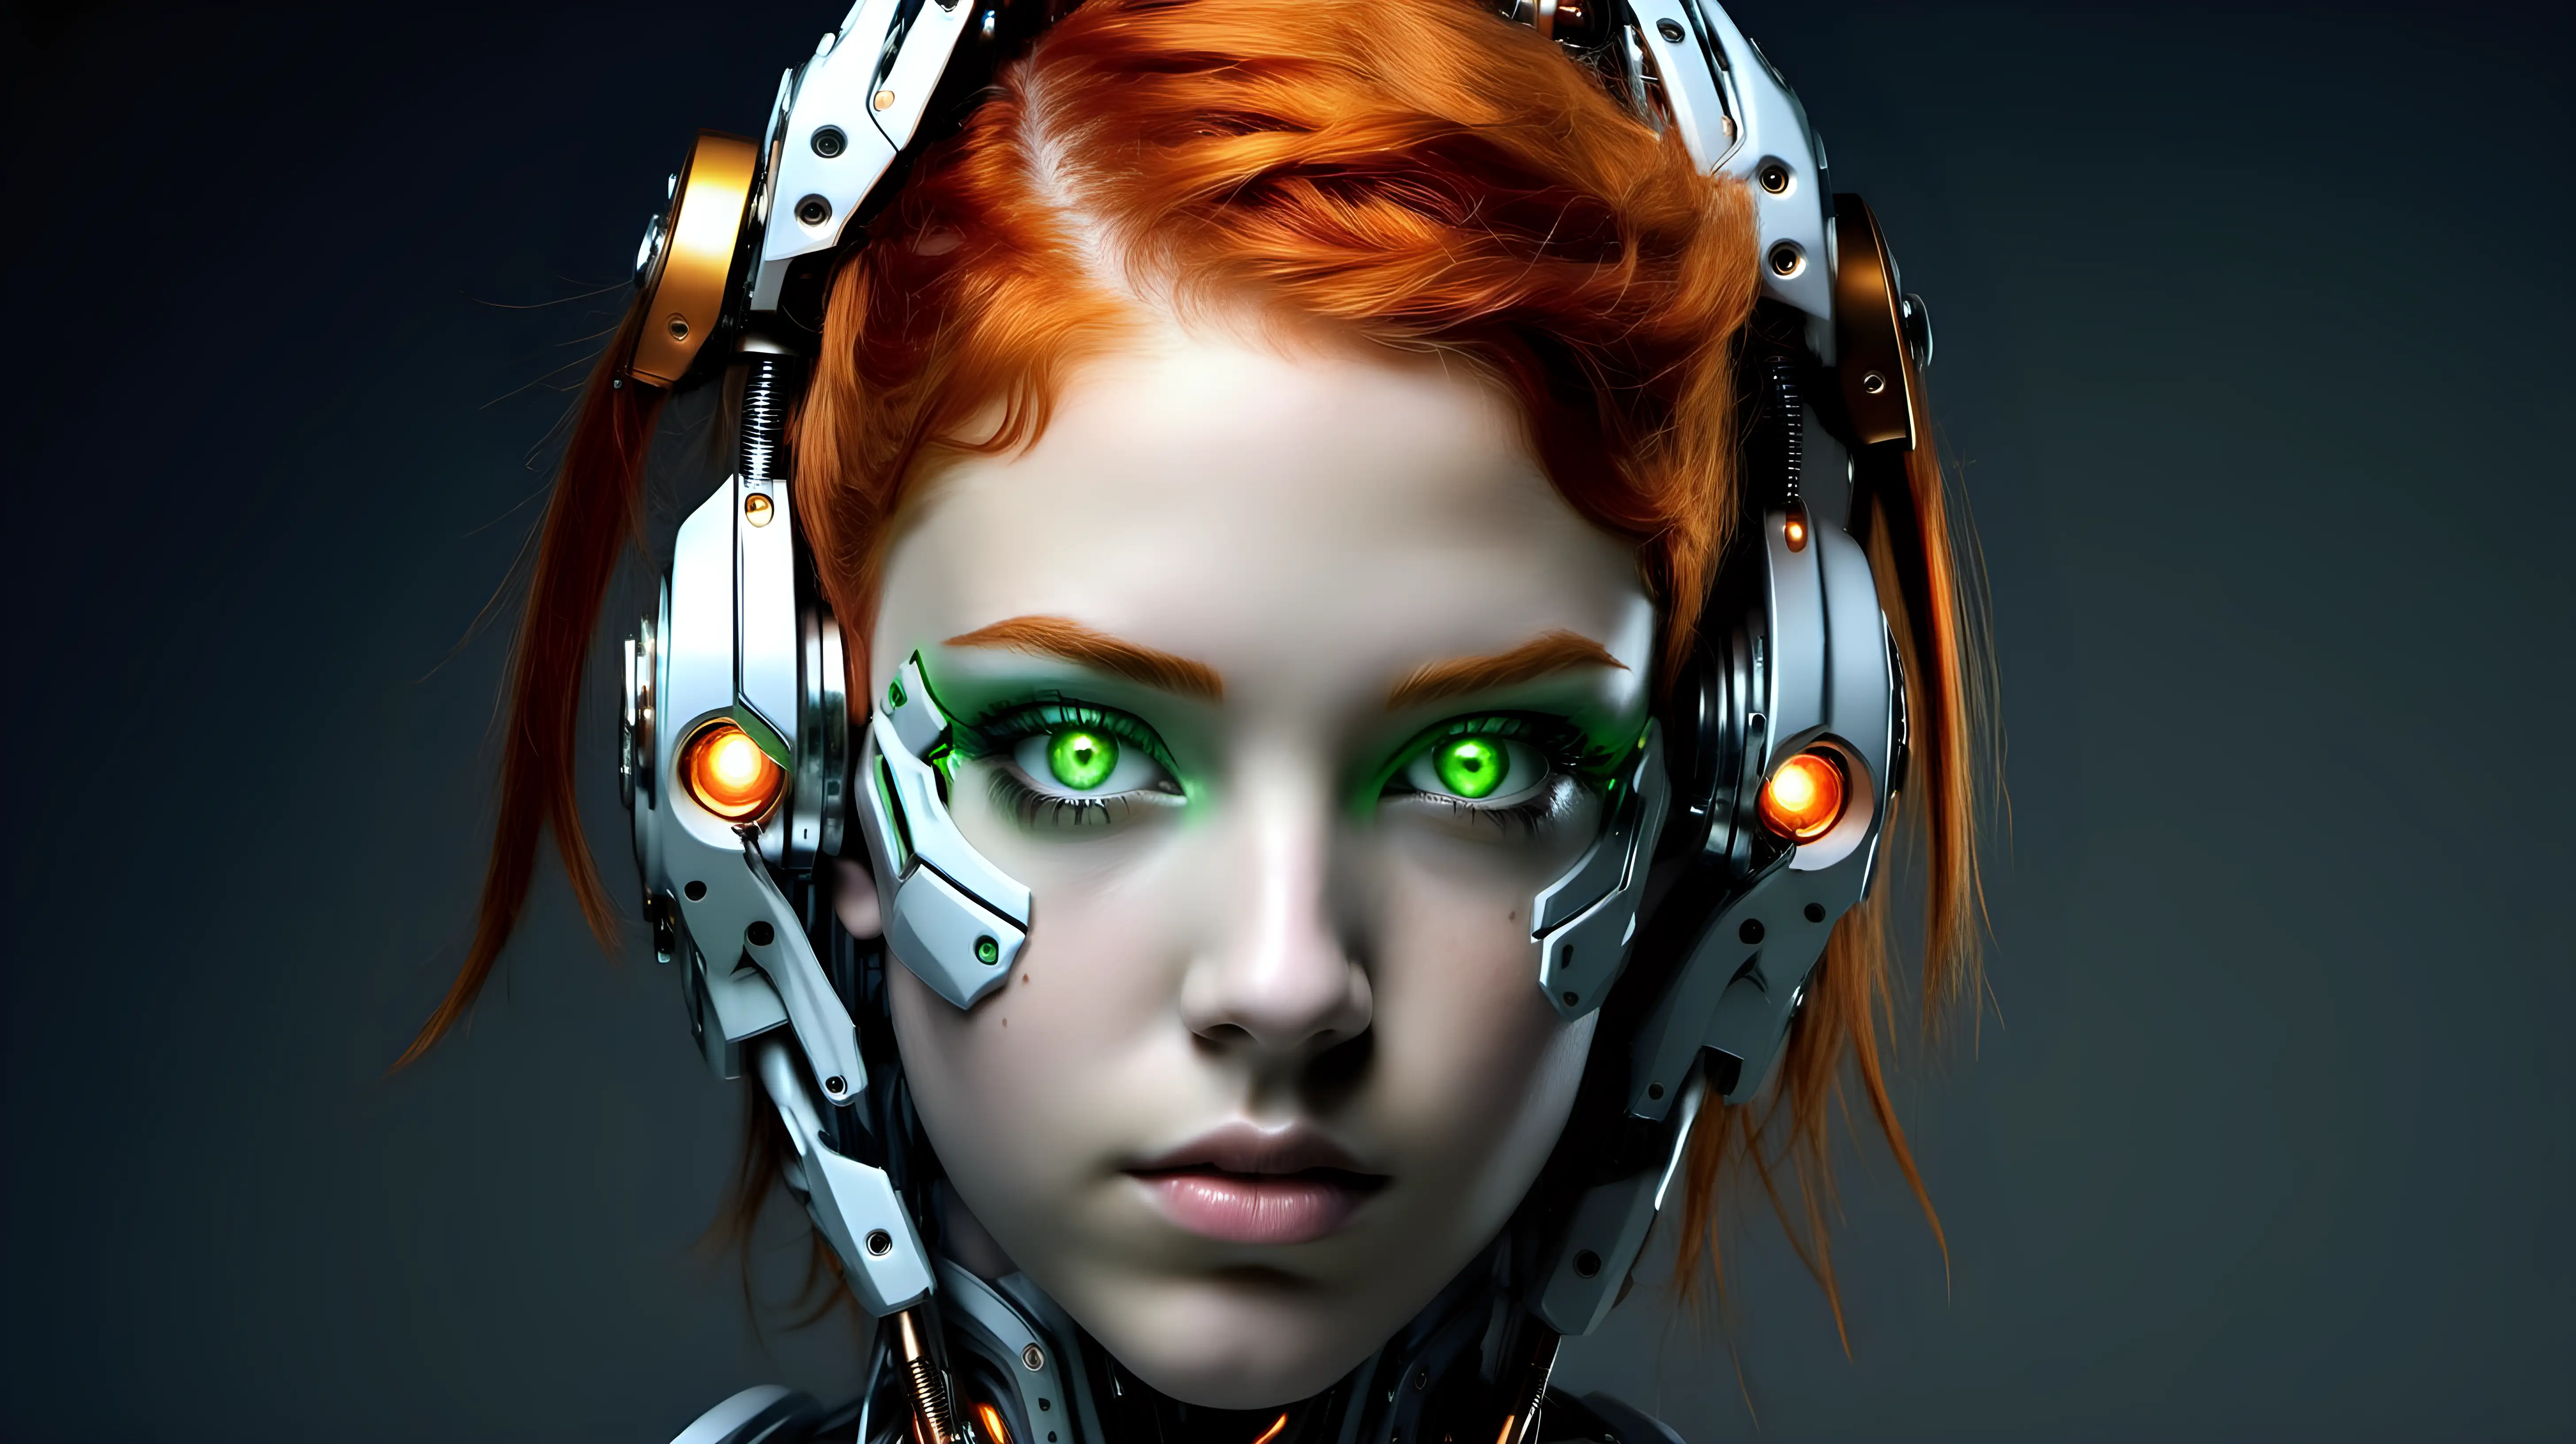 Enchanting Cyborg Beauty with Orange Hair and Green Eyes